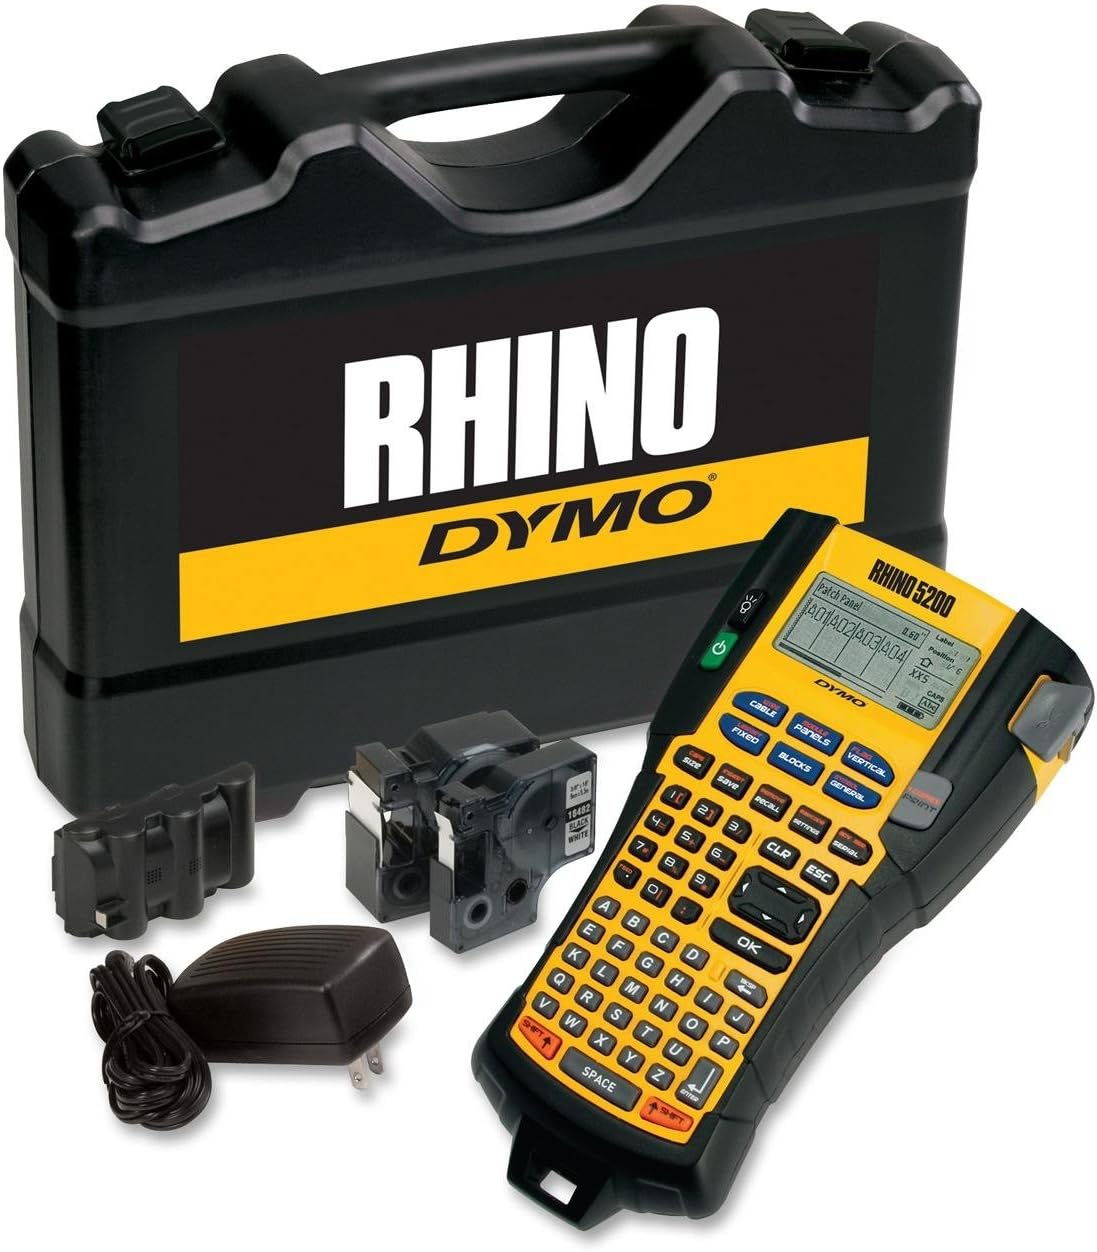 DYMO - Rhino 5200 - Kit de etiquetadora Industrial, 5 líneas